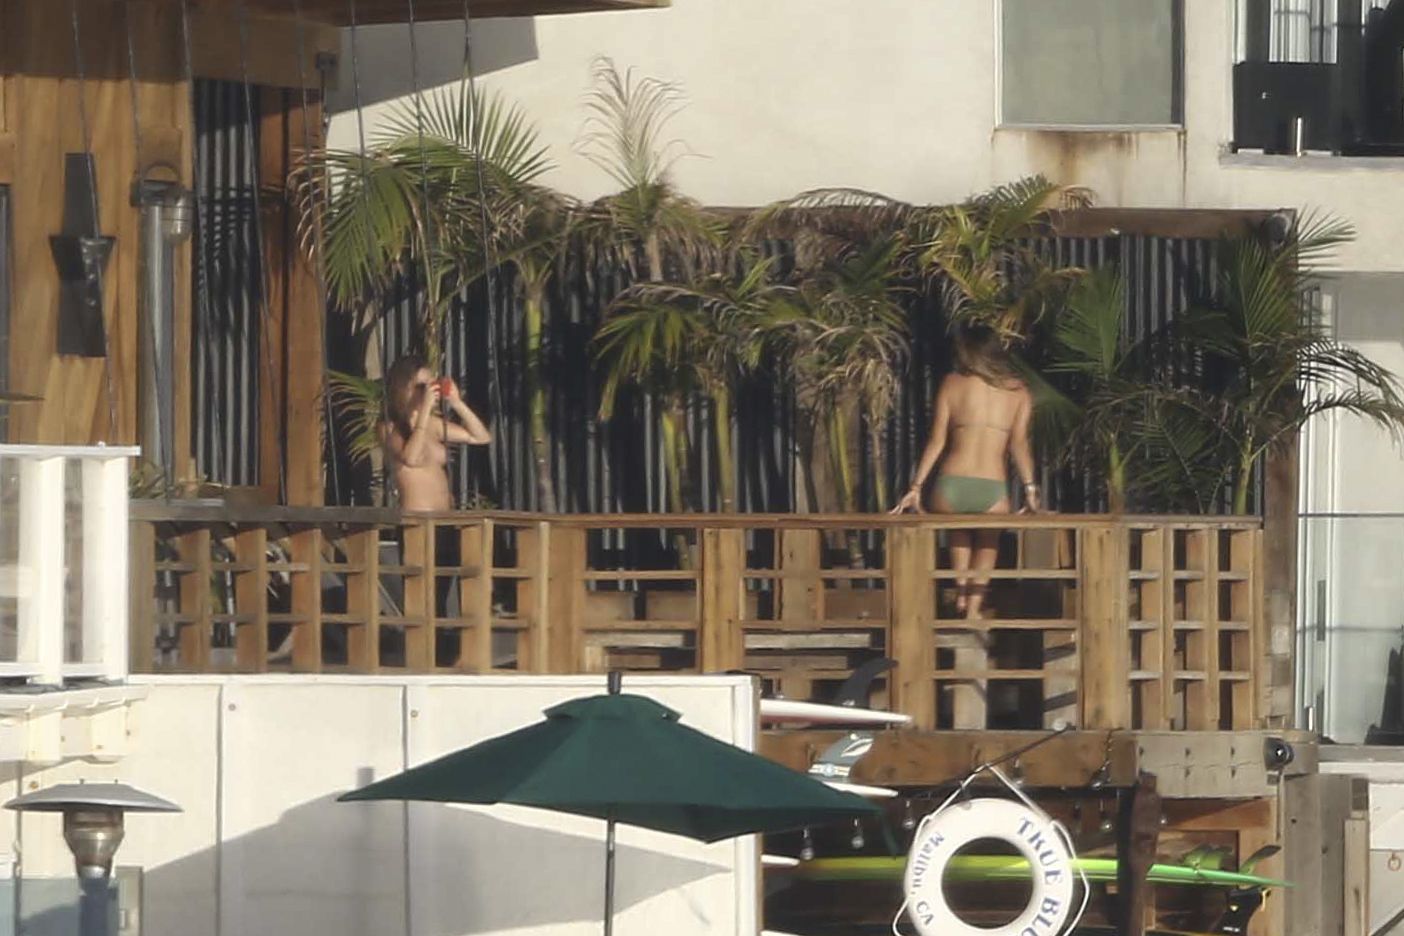 Cara_Delevingne_topless_on_a_balcony_in_Malibu_48x_HQ_24.jpg